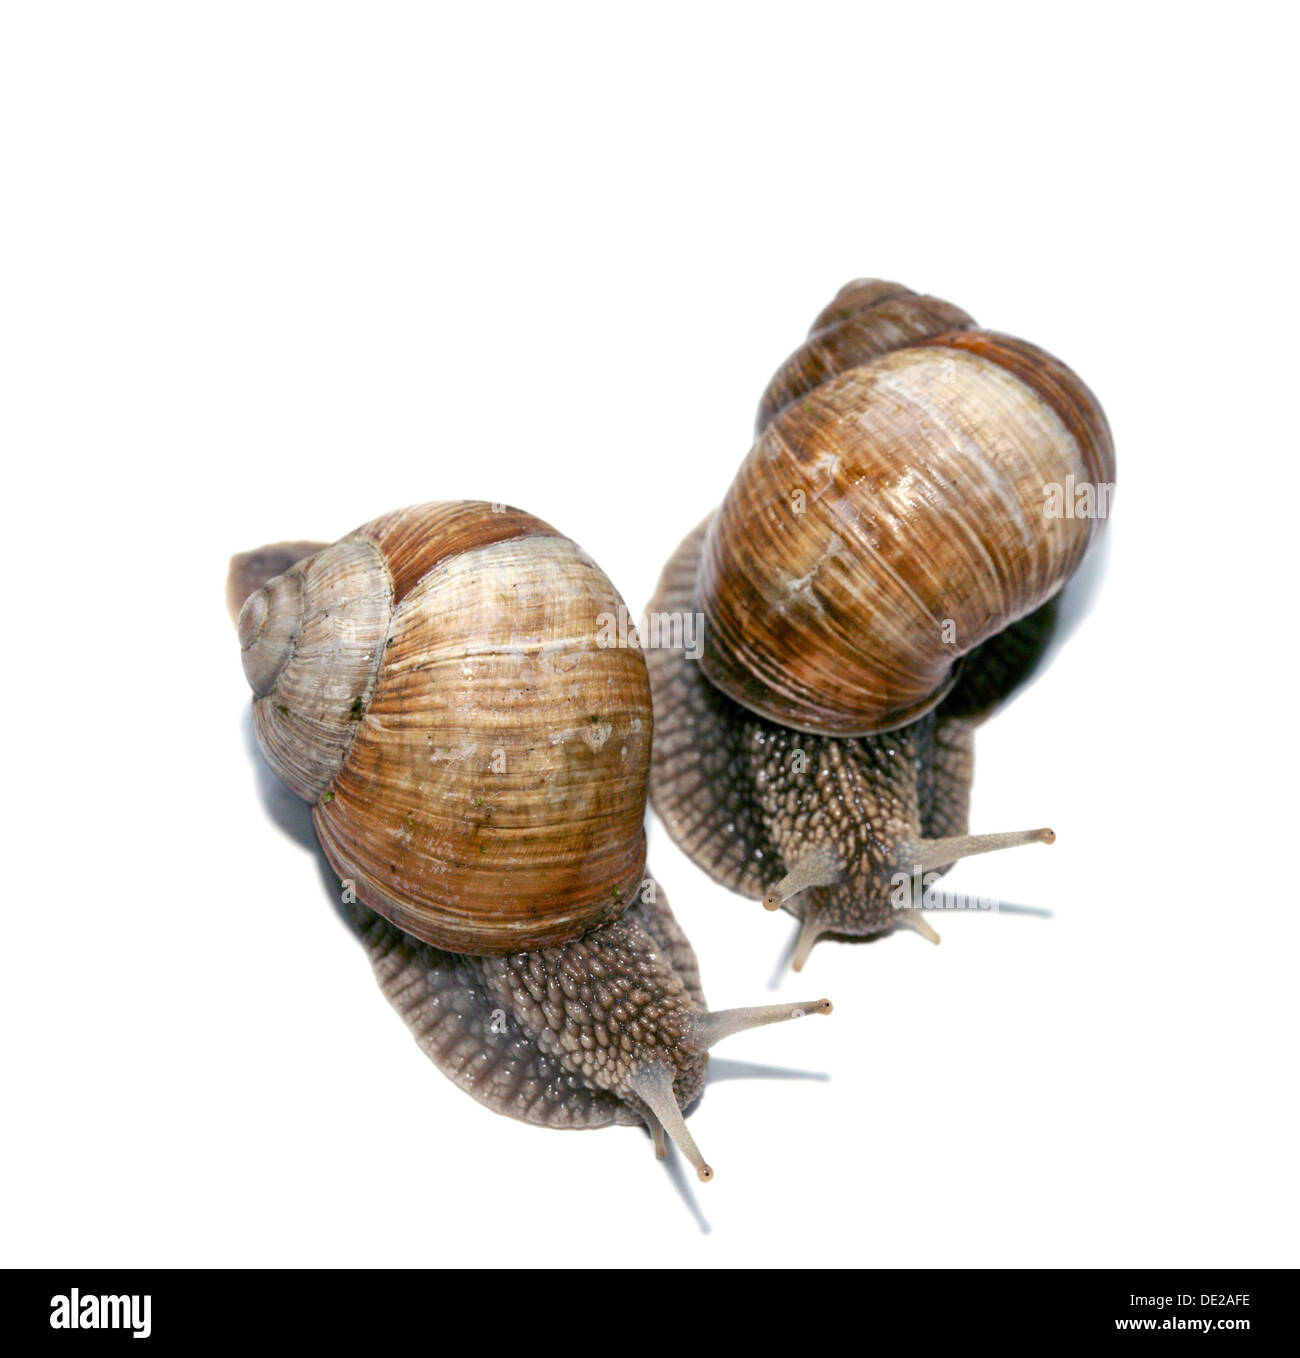 Two Burgundy snails, Roman snails, edible snails or escargots (Helix pomatia) Stock Photo